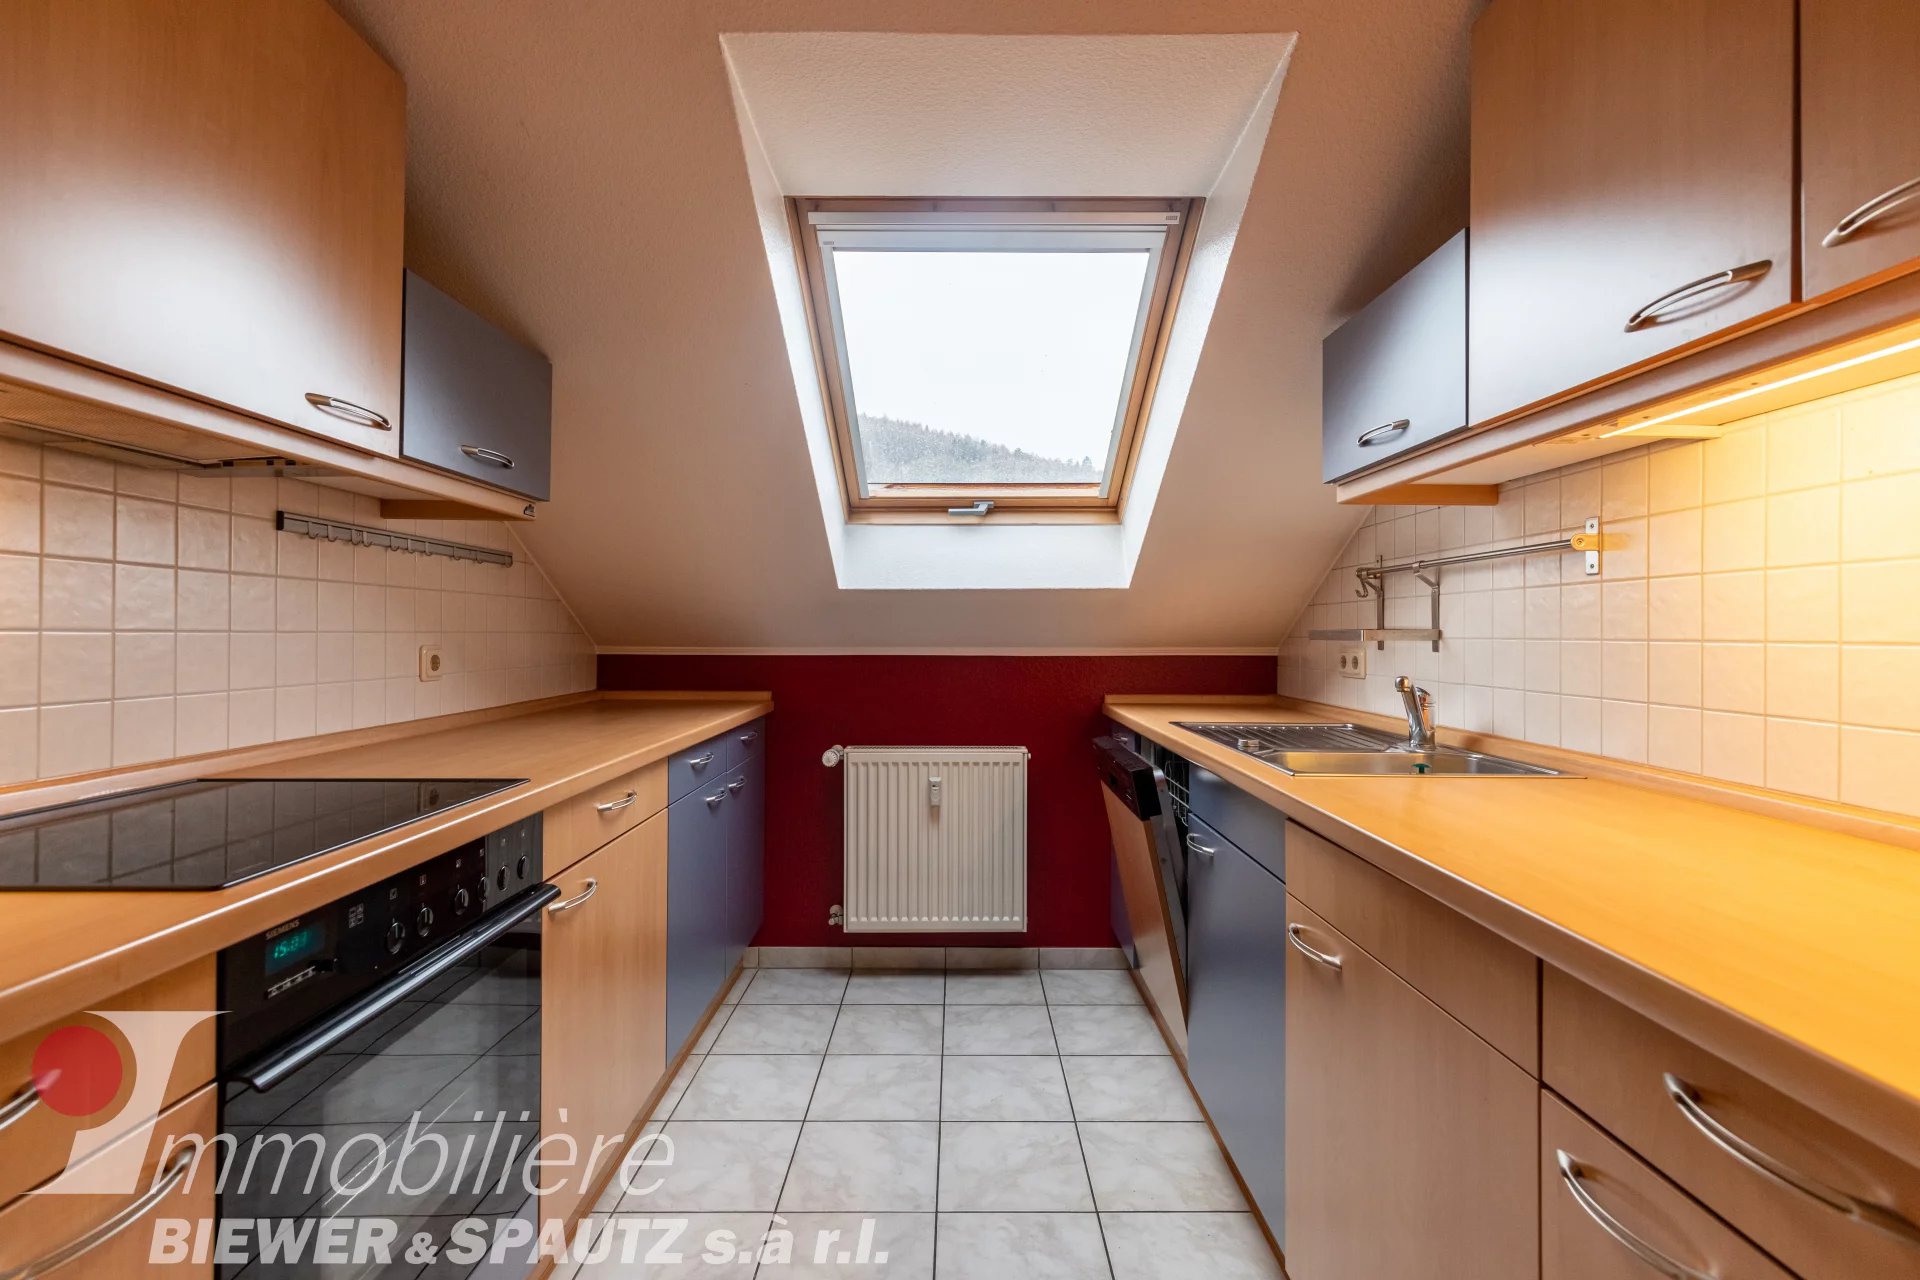 UNDER SALES AGREEMENT - Apartment with 2 bedrooms in Echternach